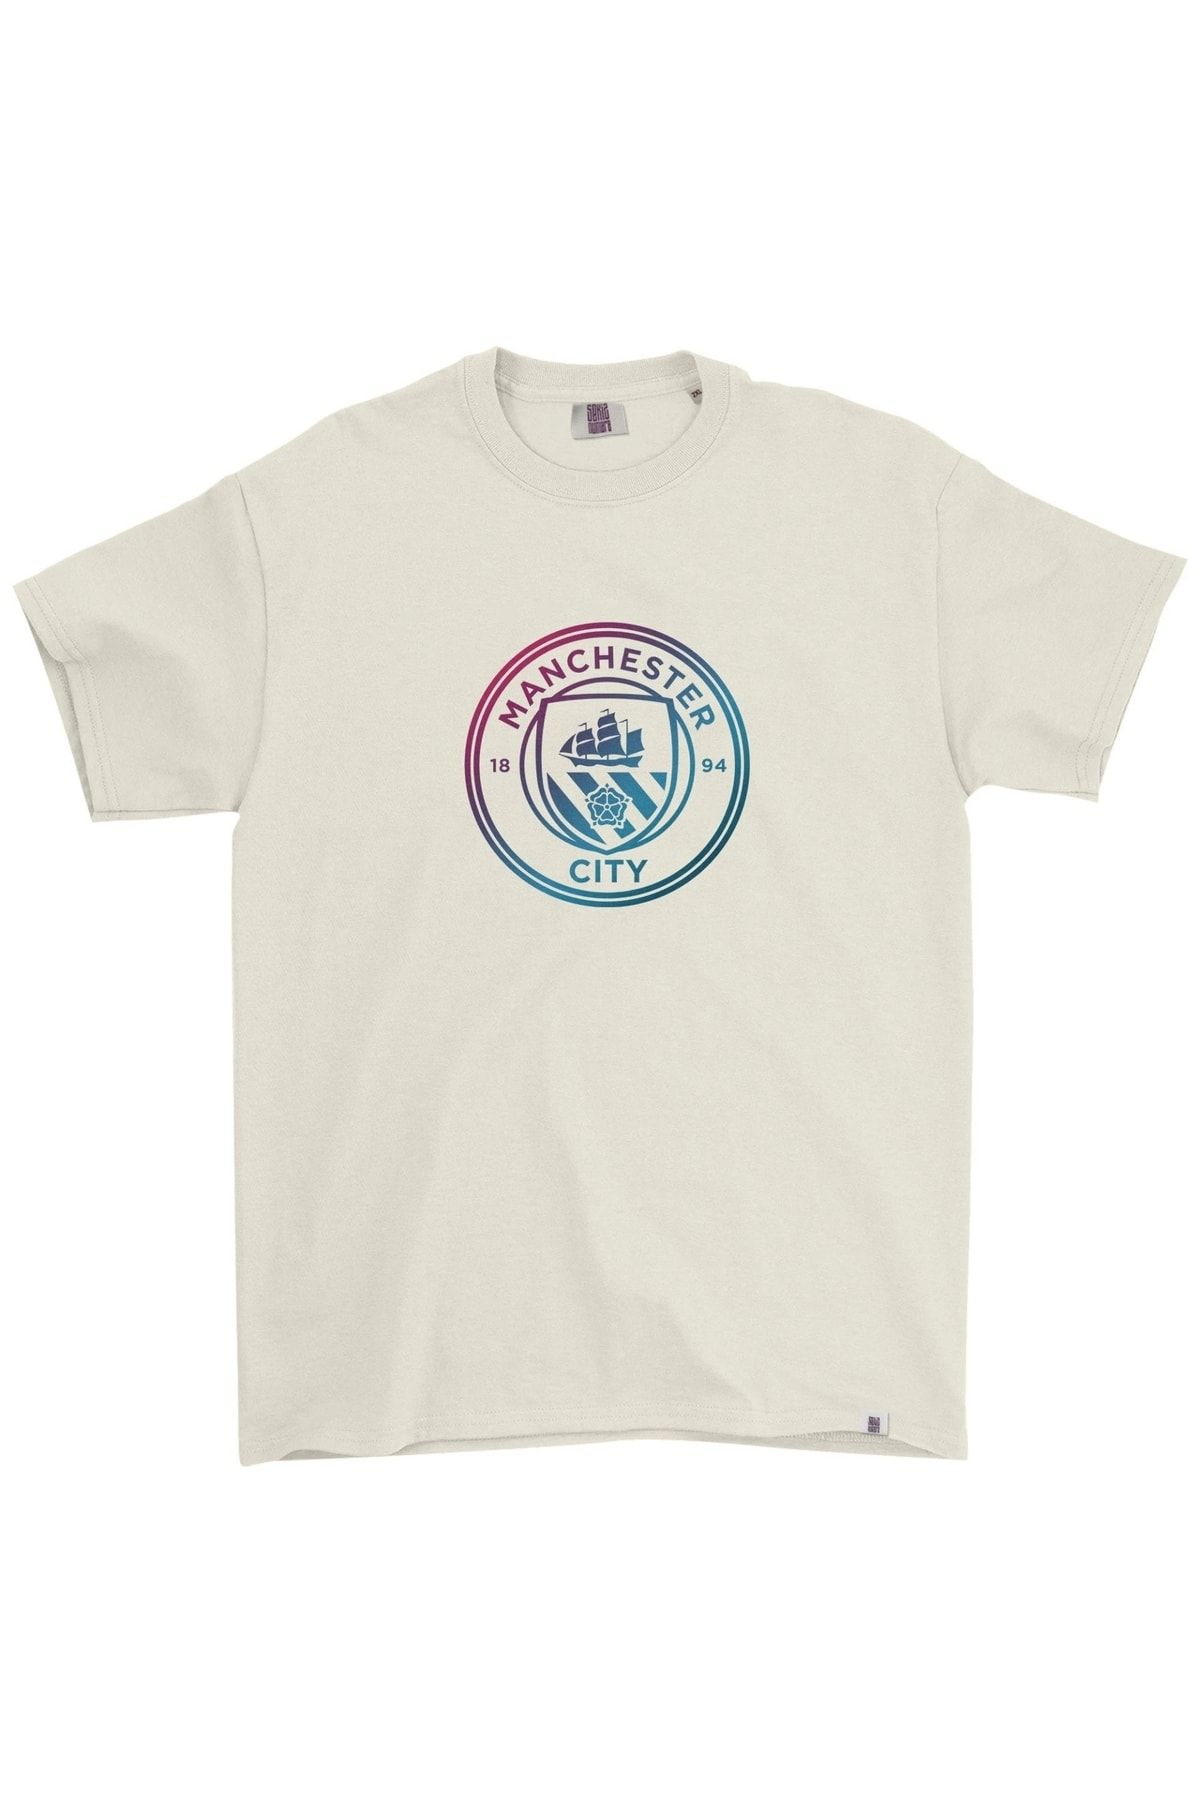 Sekiz Numara Manchester City Lazer Tişört